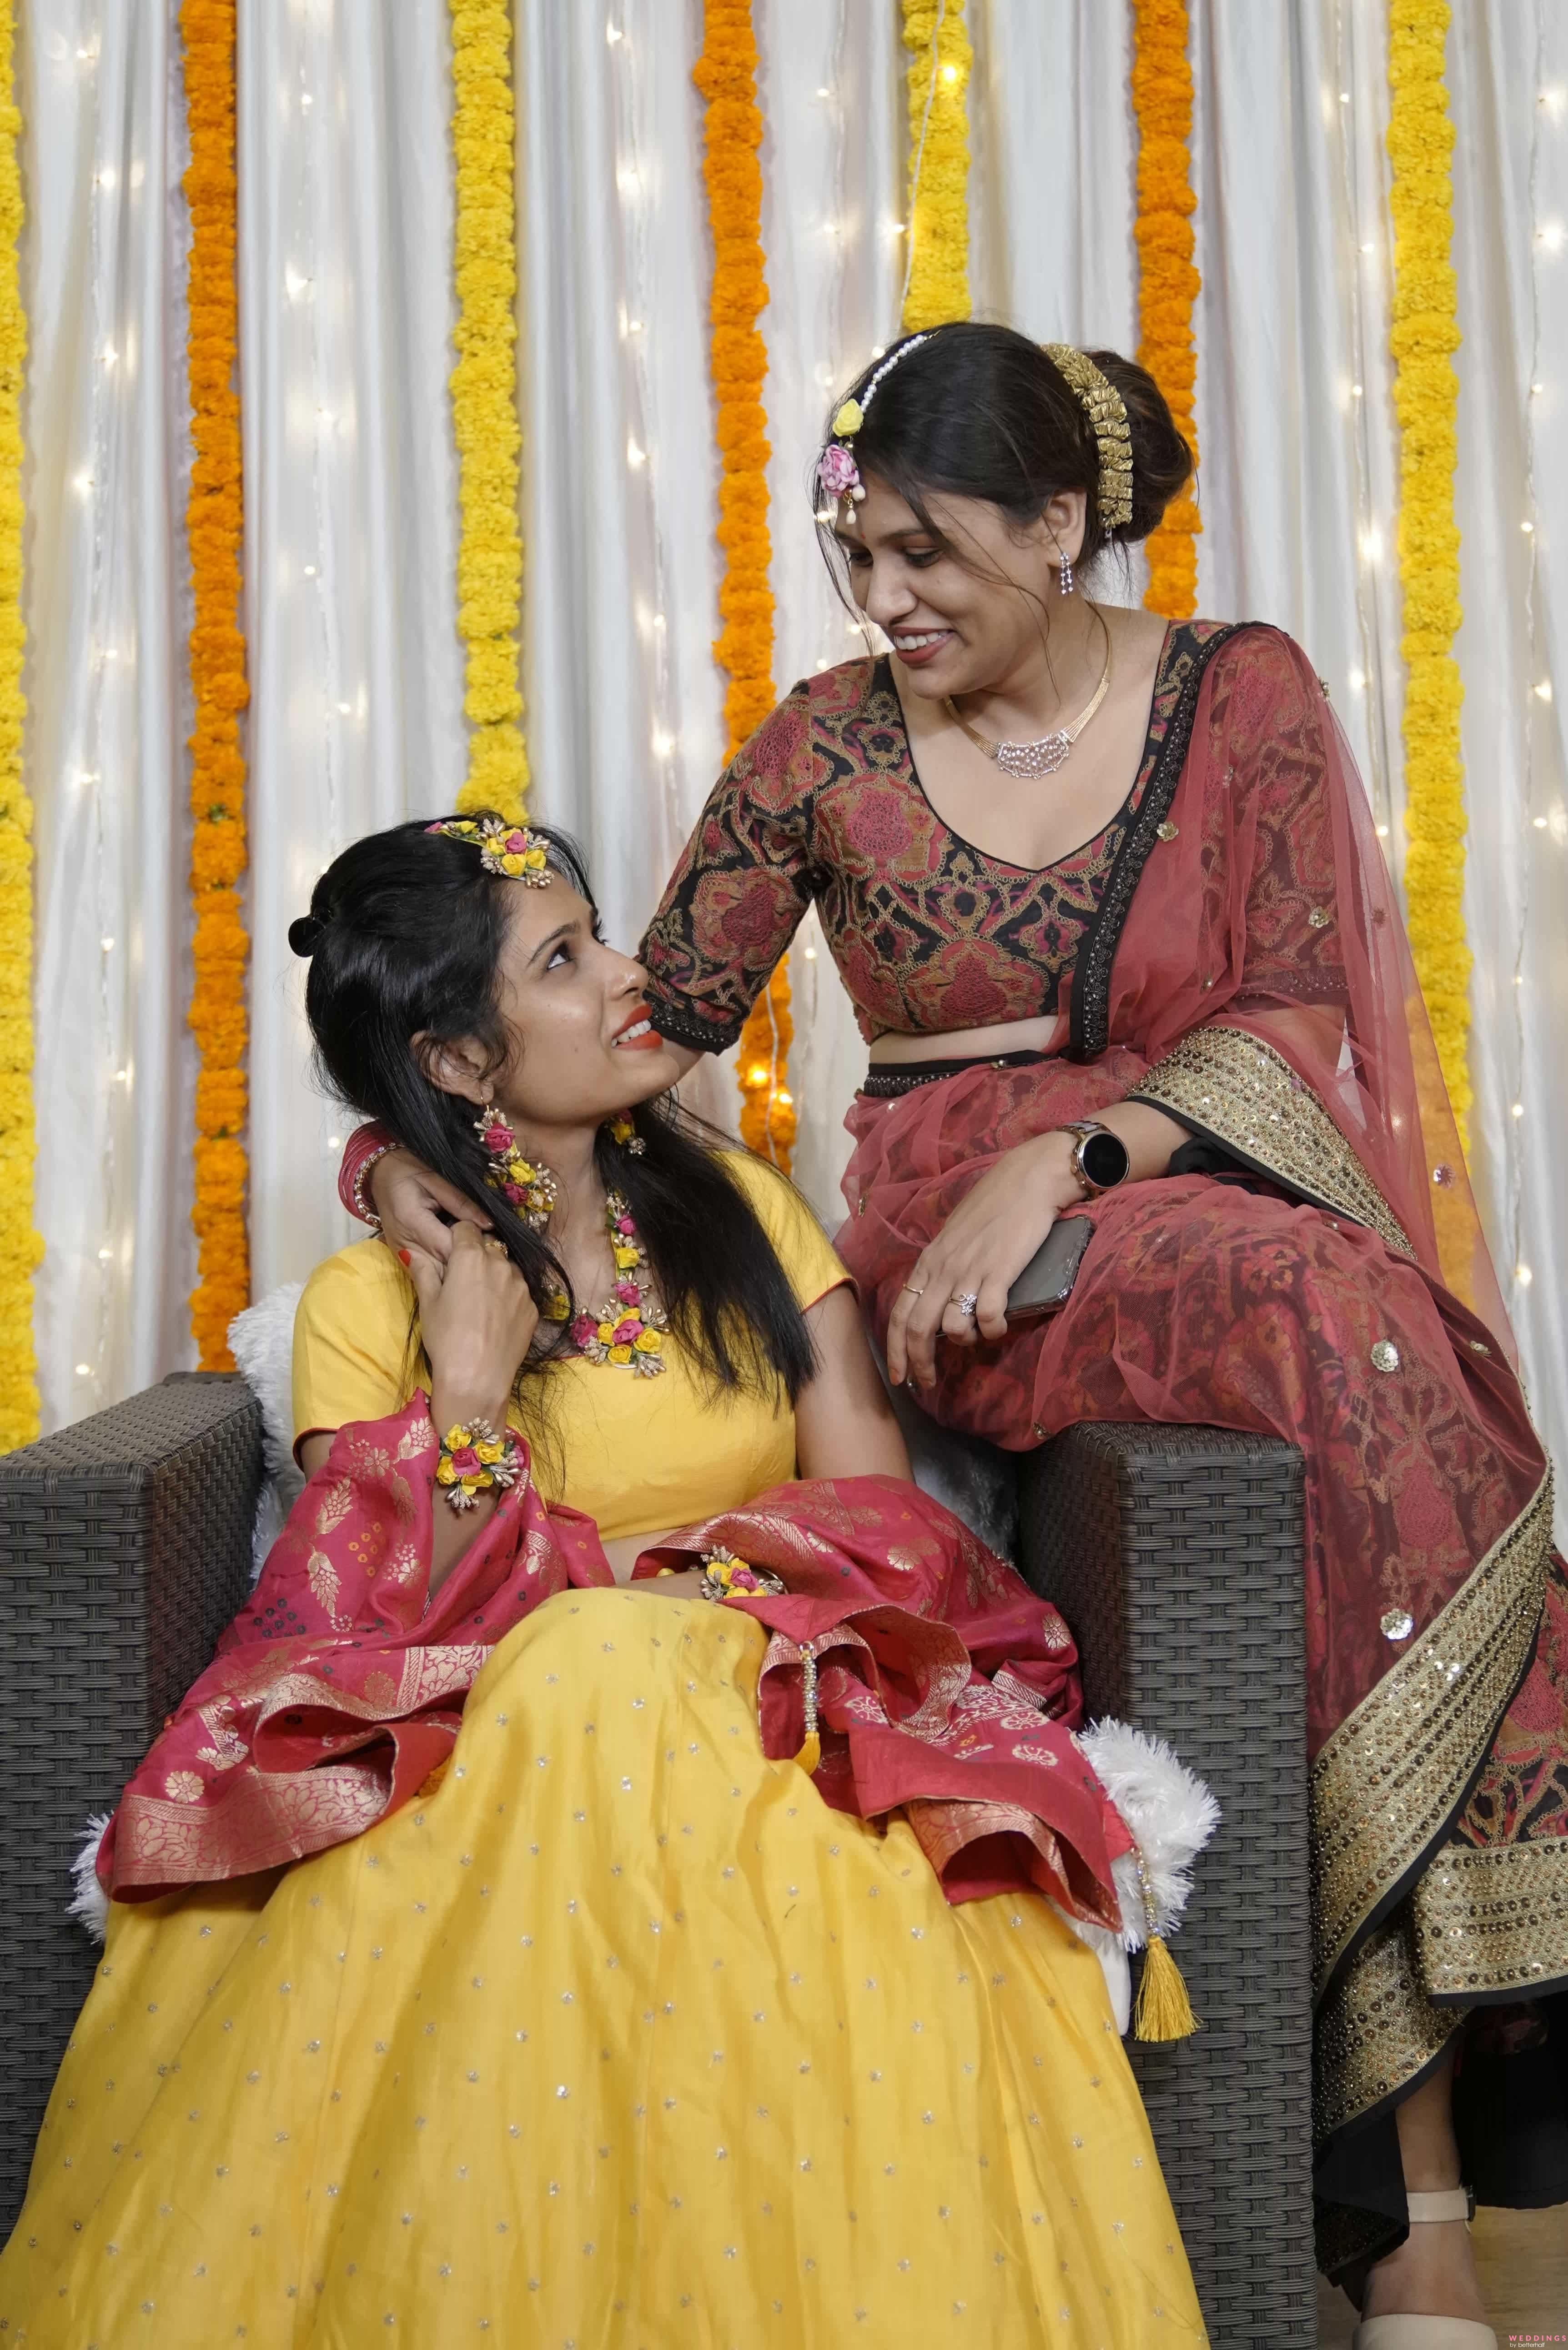 30 Best Haldi Photos From Indian Weddings You Cannot Miss! | Haldi ceremony,  Bride groom photoshoot, Groom photoshoot